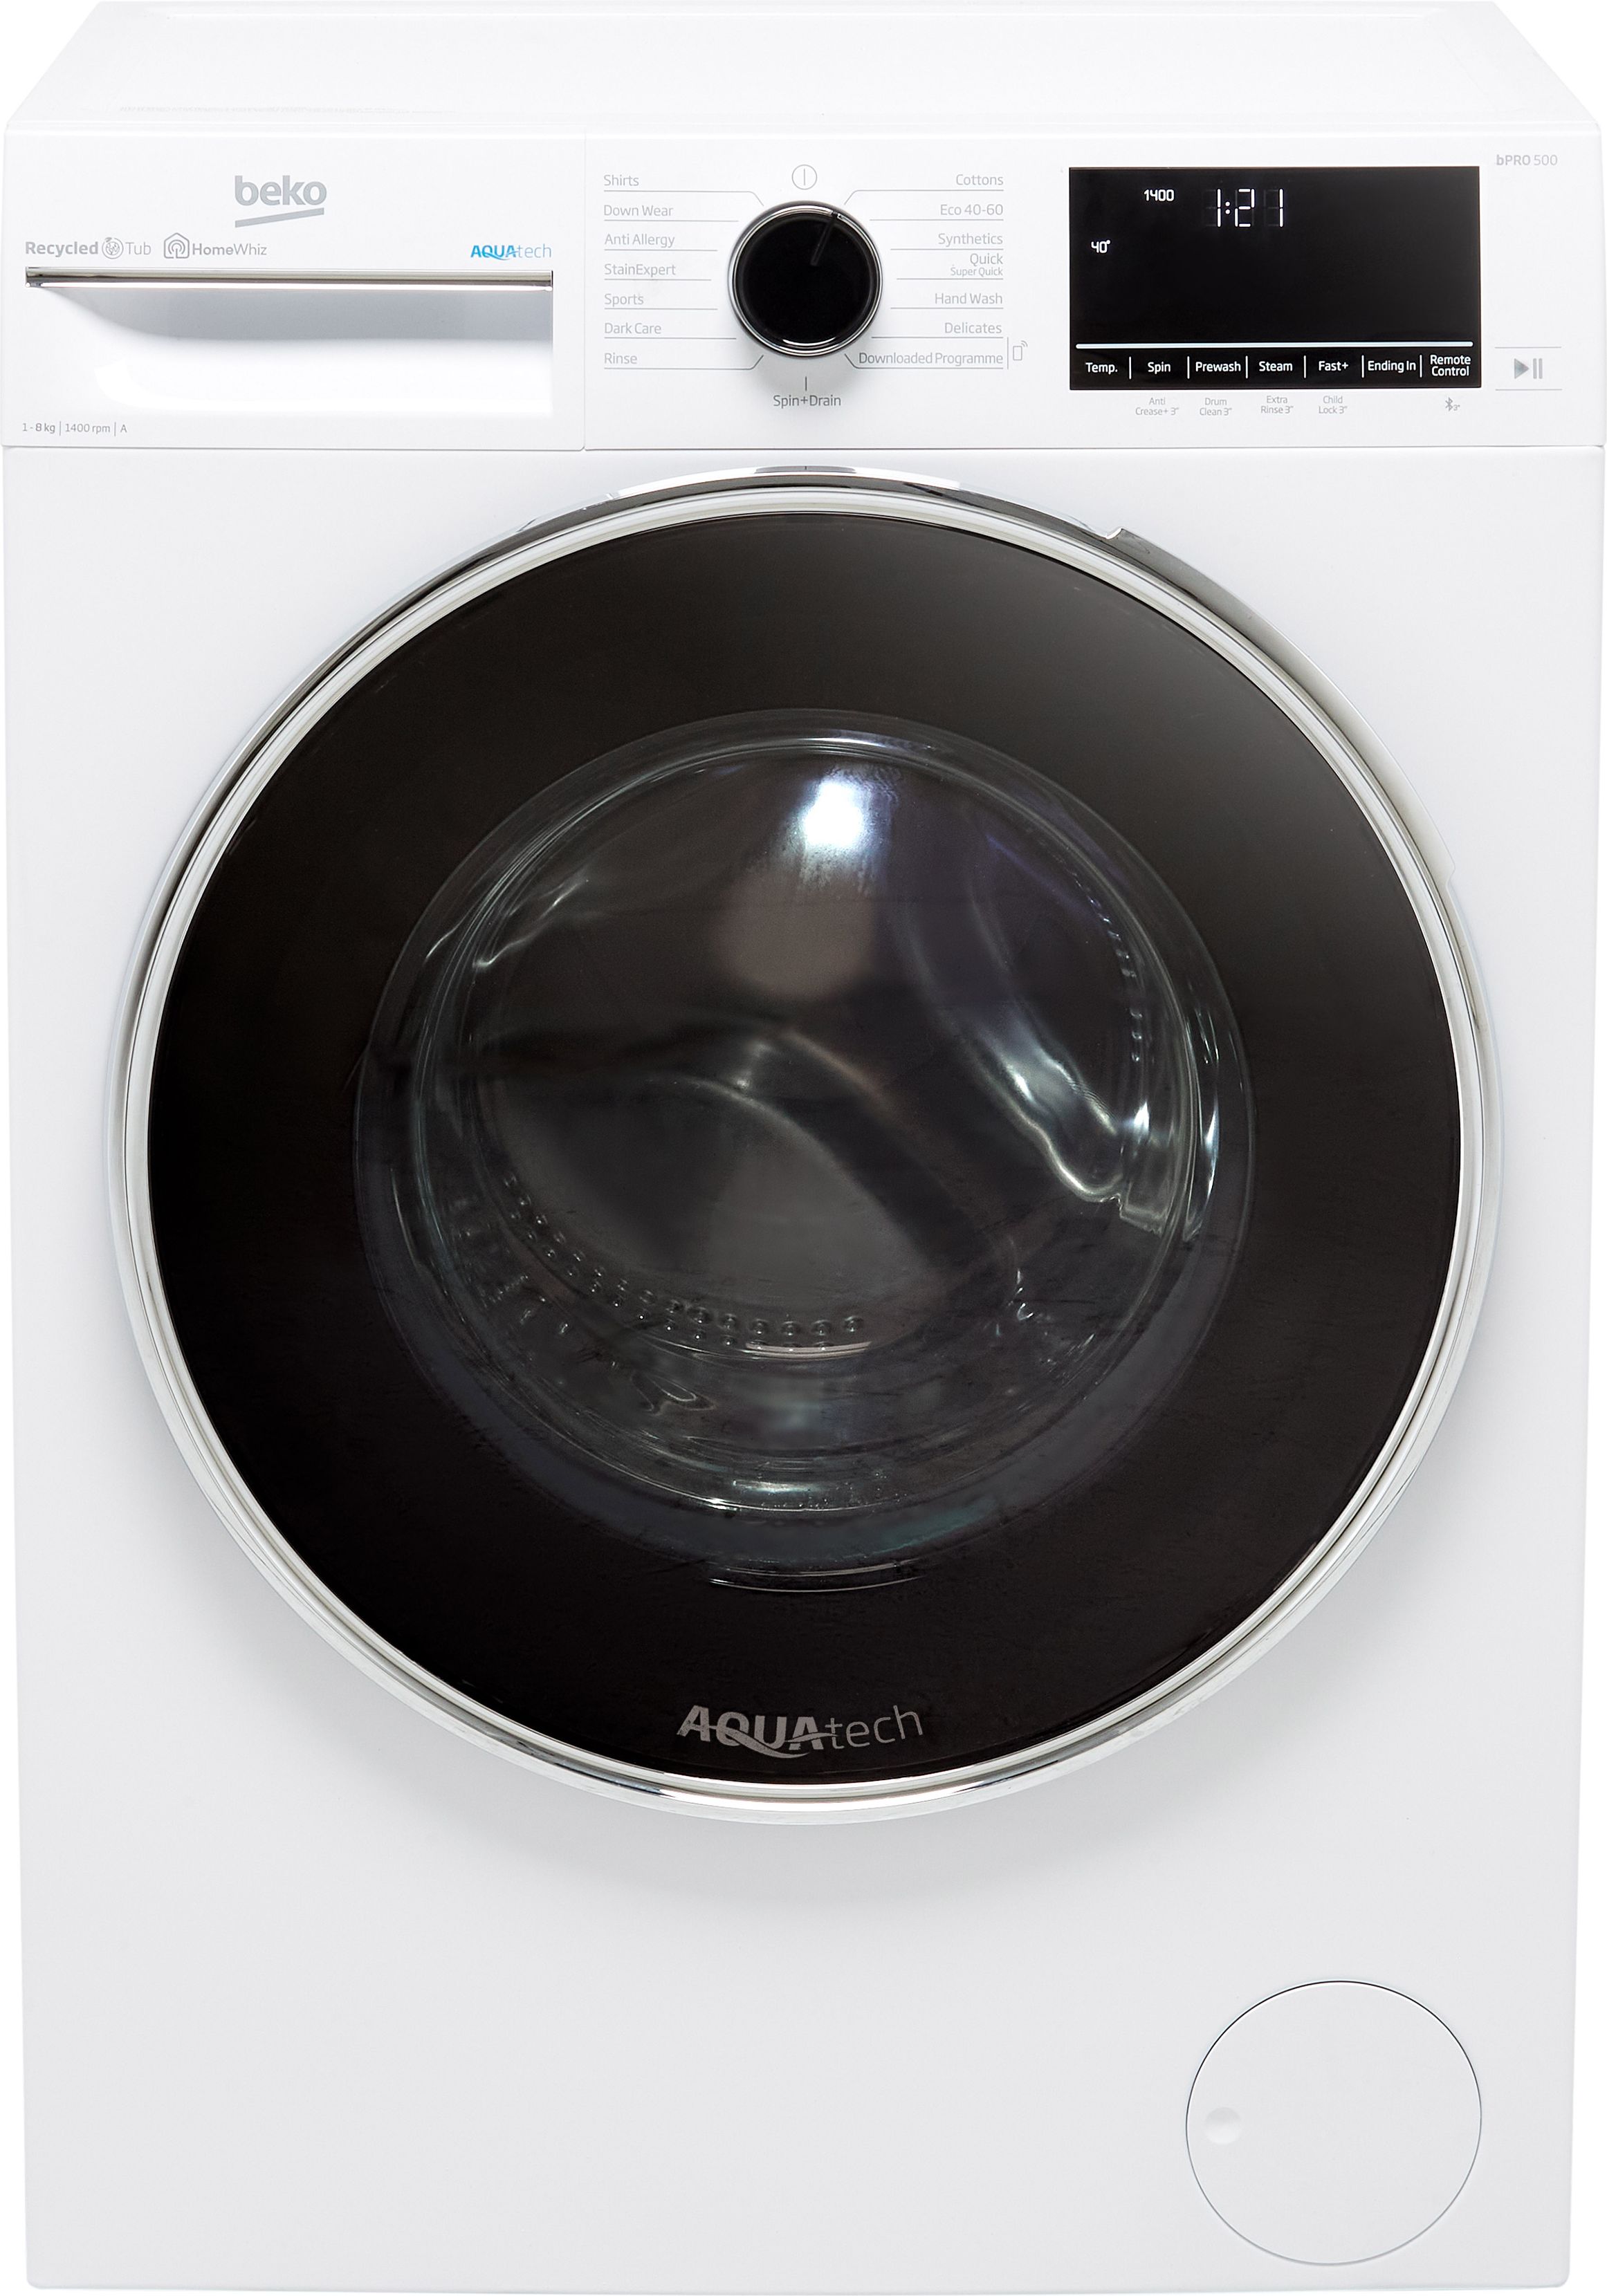 Beko Aquatech RecycledTub B5W5841AW 8kg Washing Machine with 1400 rpm - White - A Rated, White